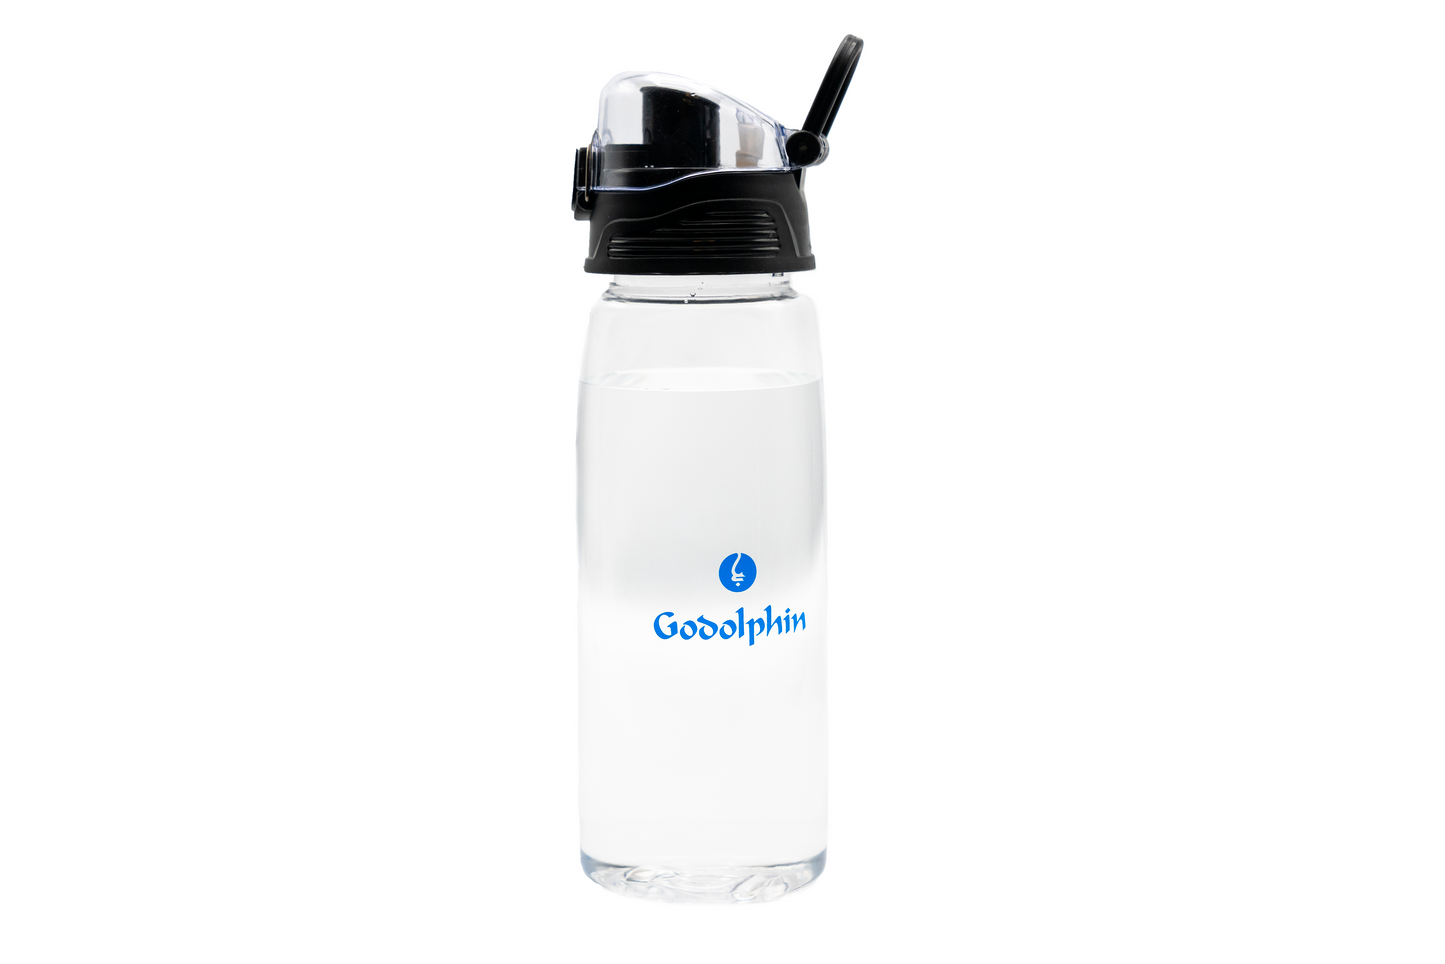 Godolphin Water Bottle